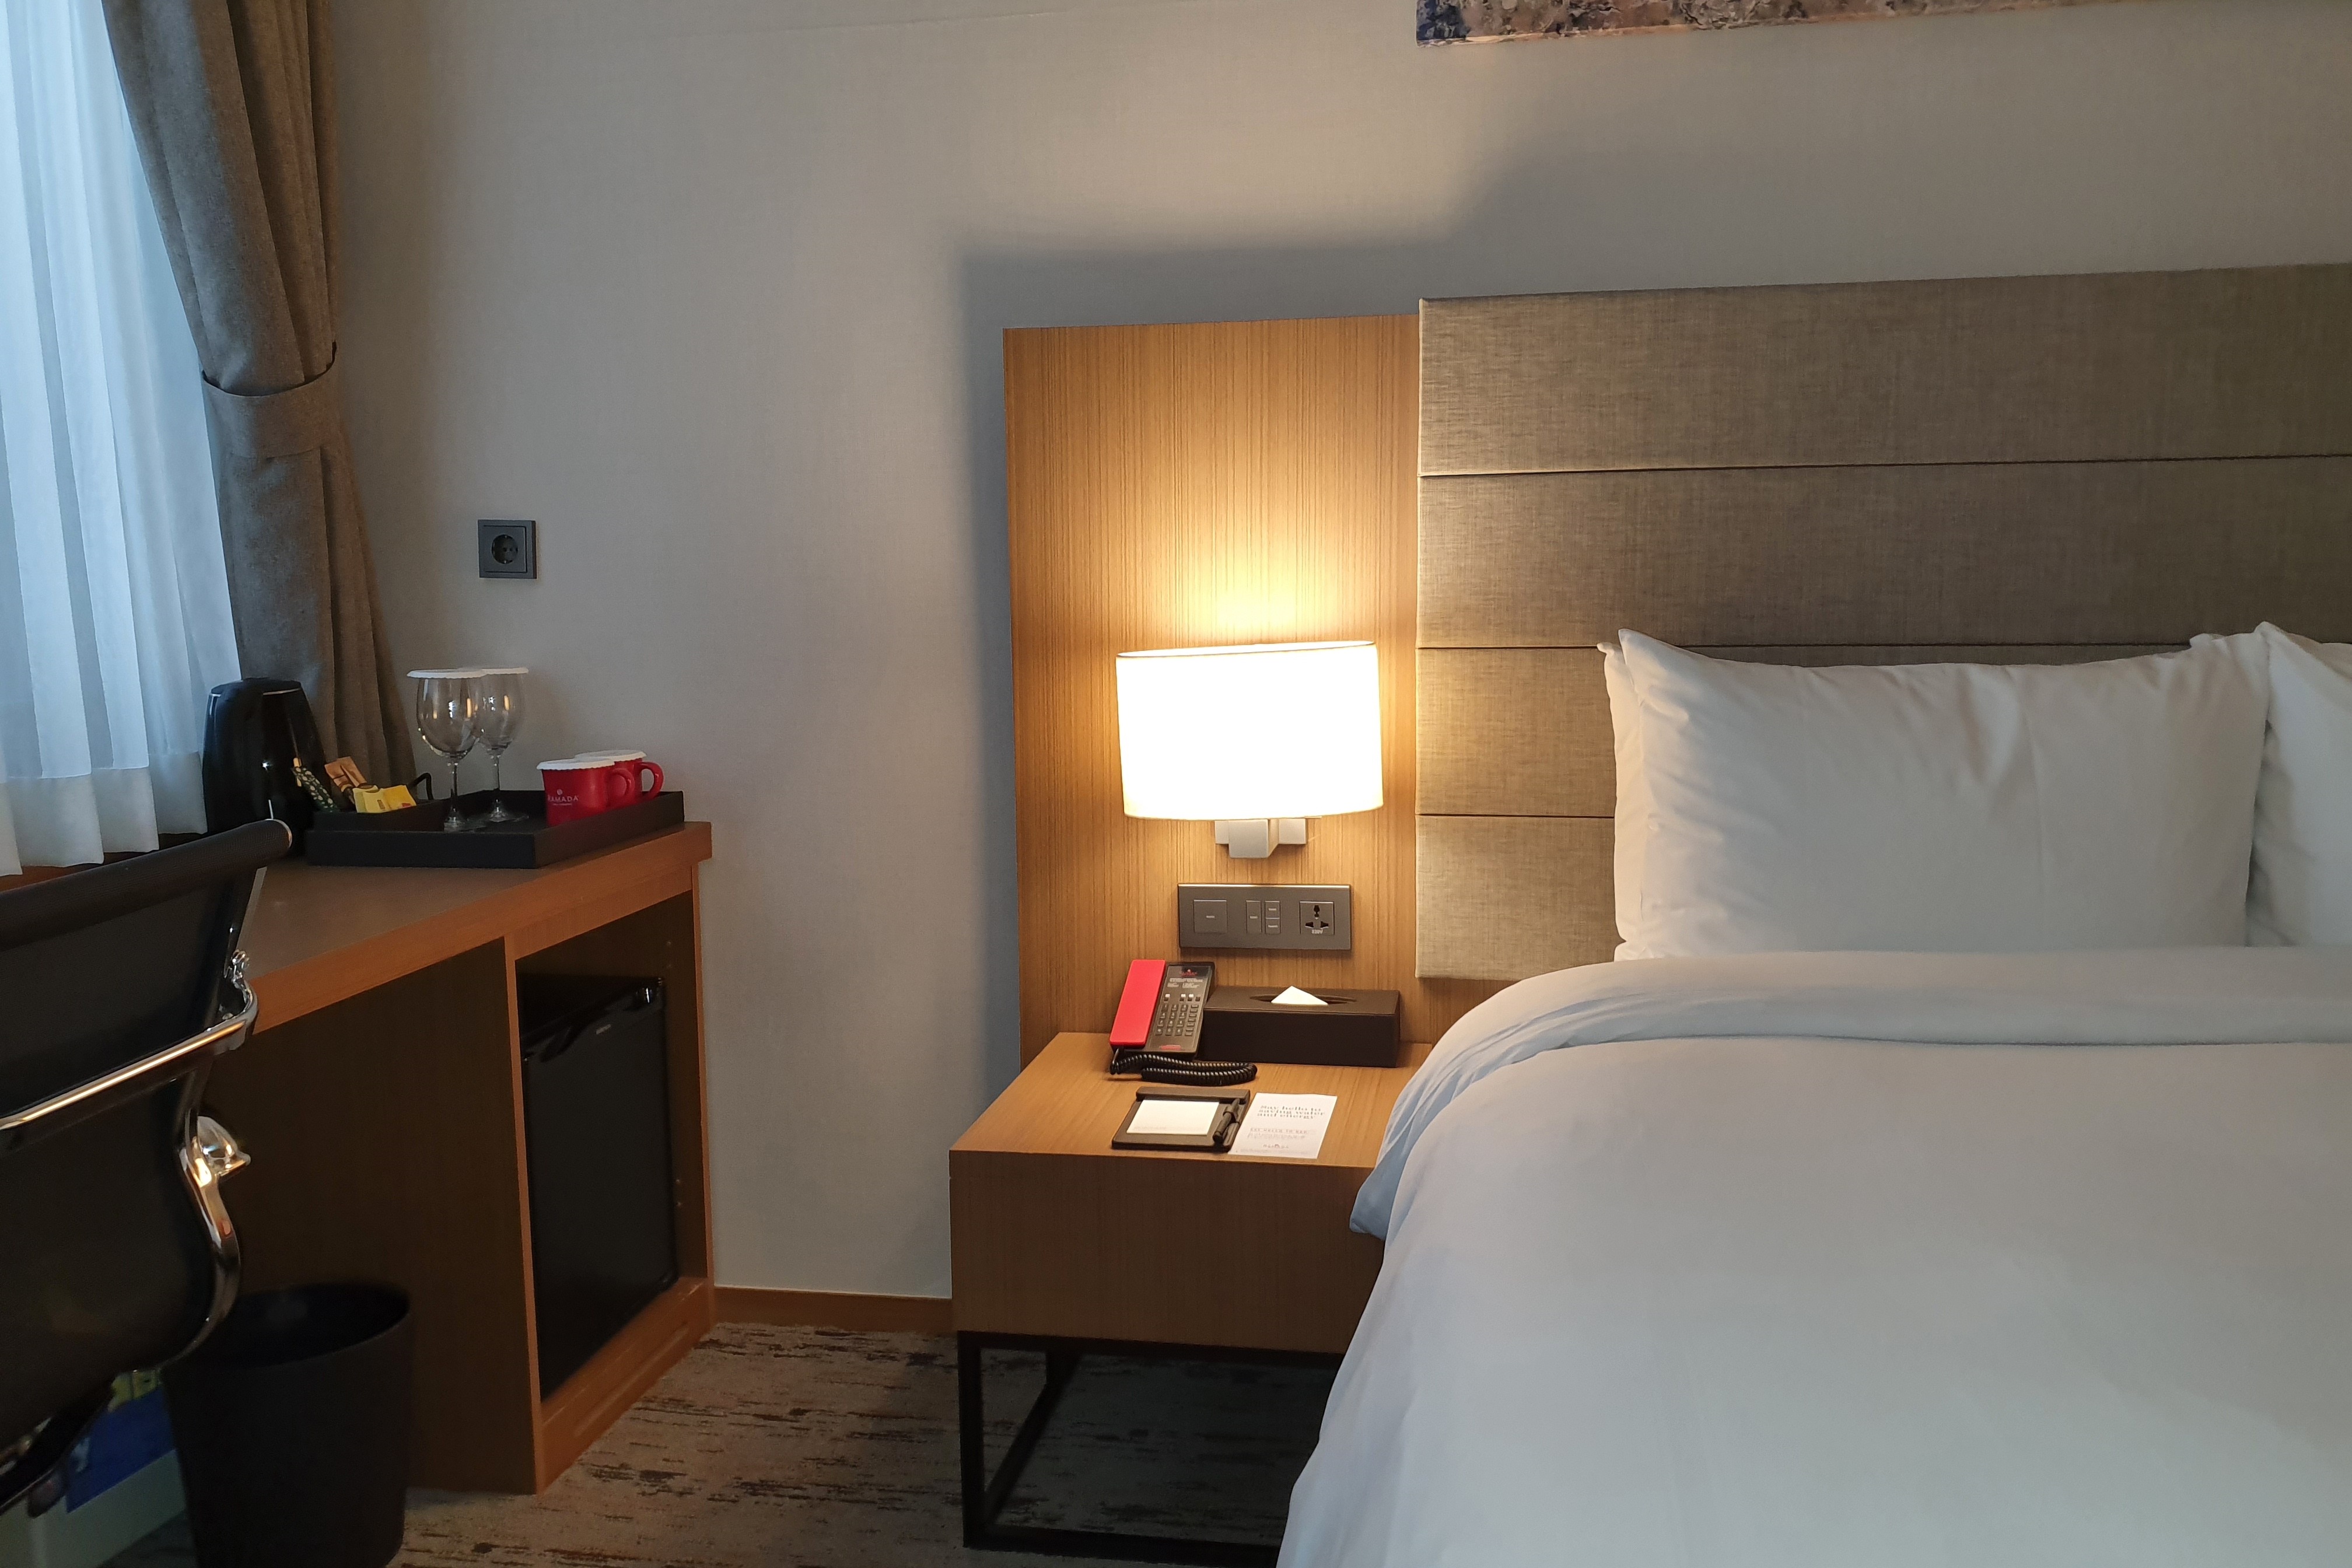 Ramada Seoul Sindorim Hotel2 : A cozy room with nightstand lights